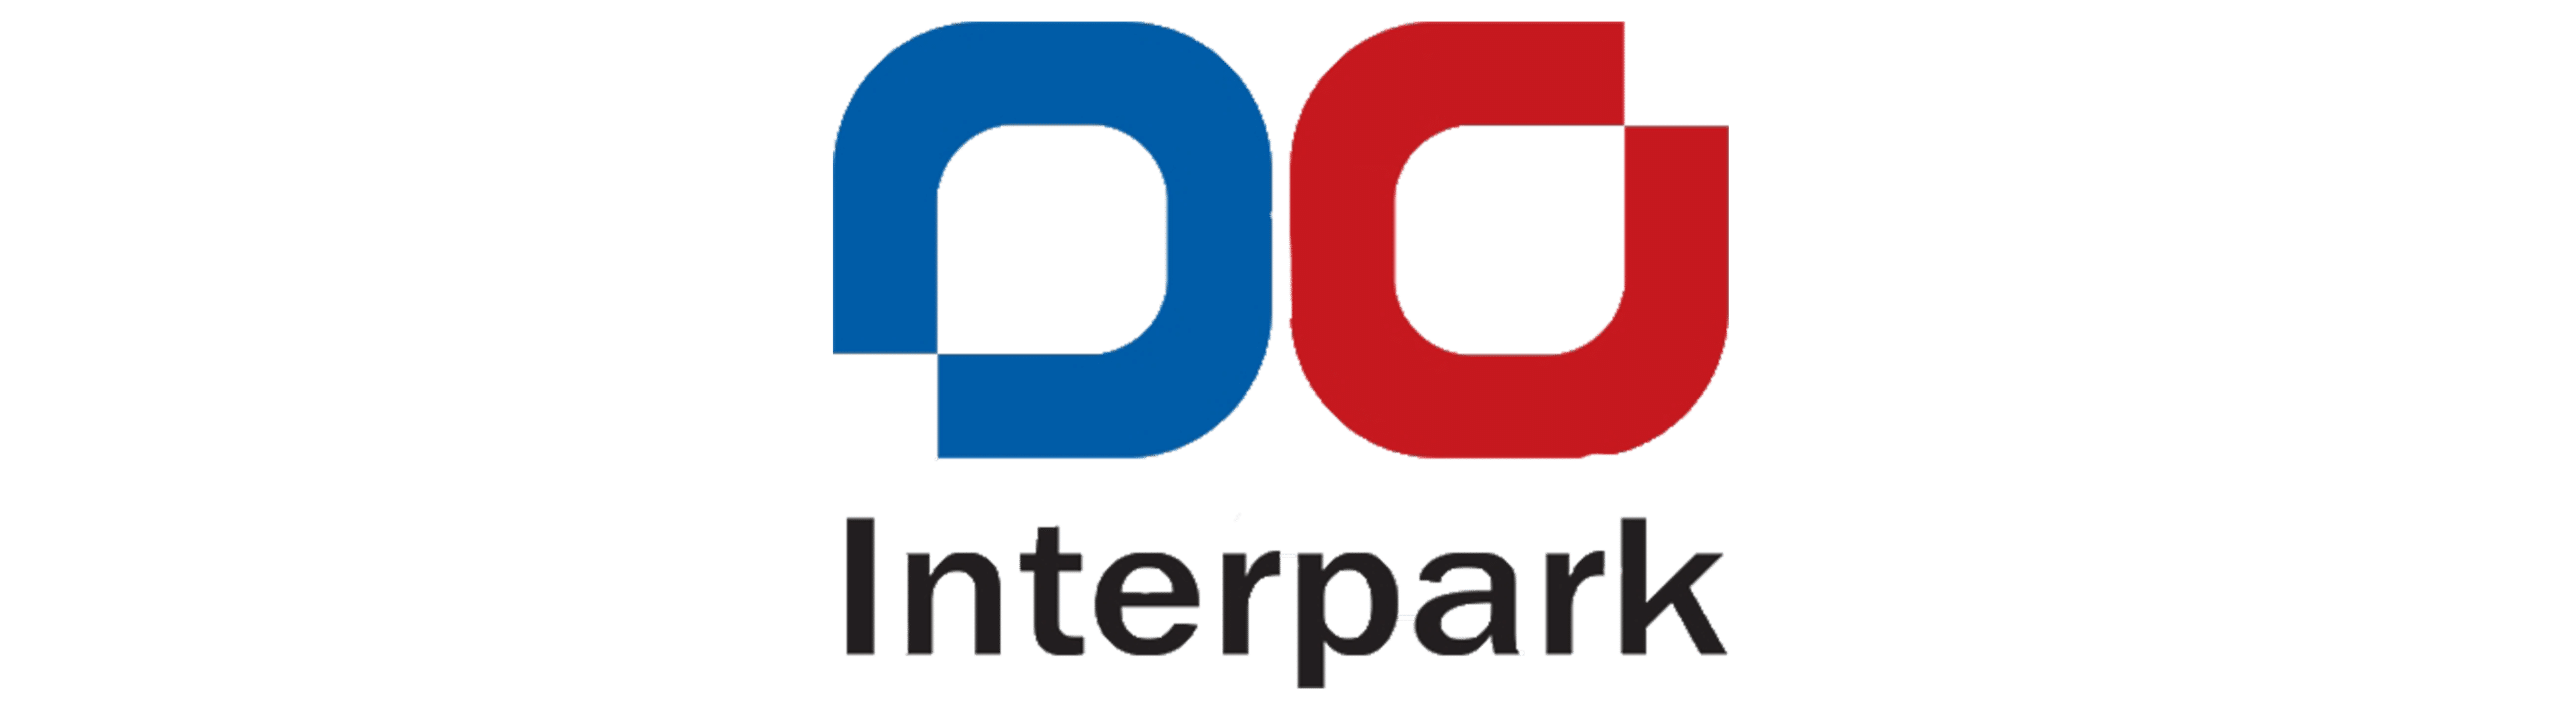 Interpark (South Africa) Pty Ltd logo Zeitz MOCAA